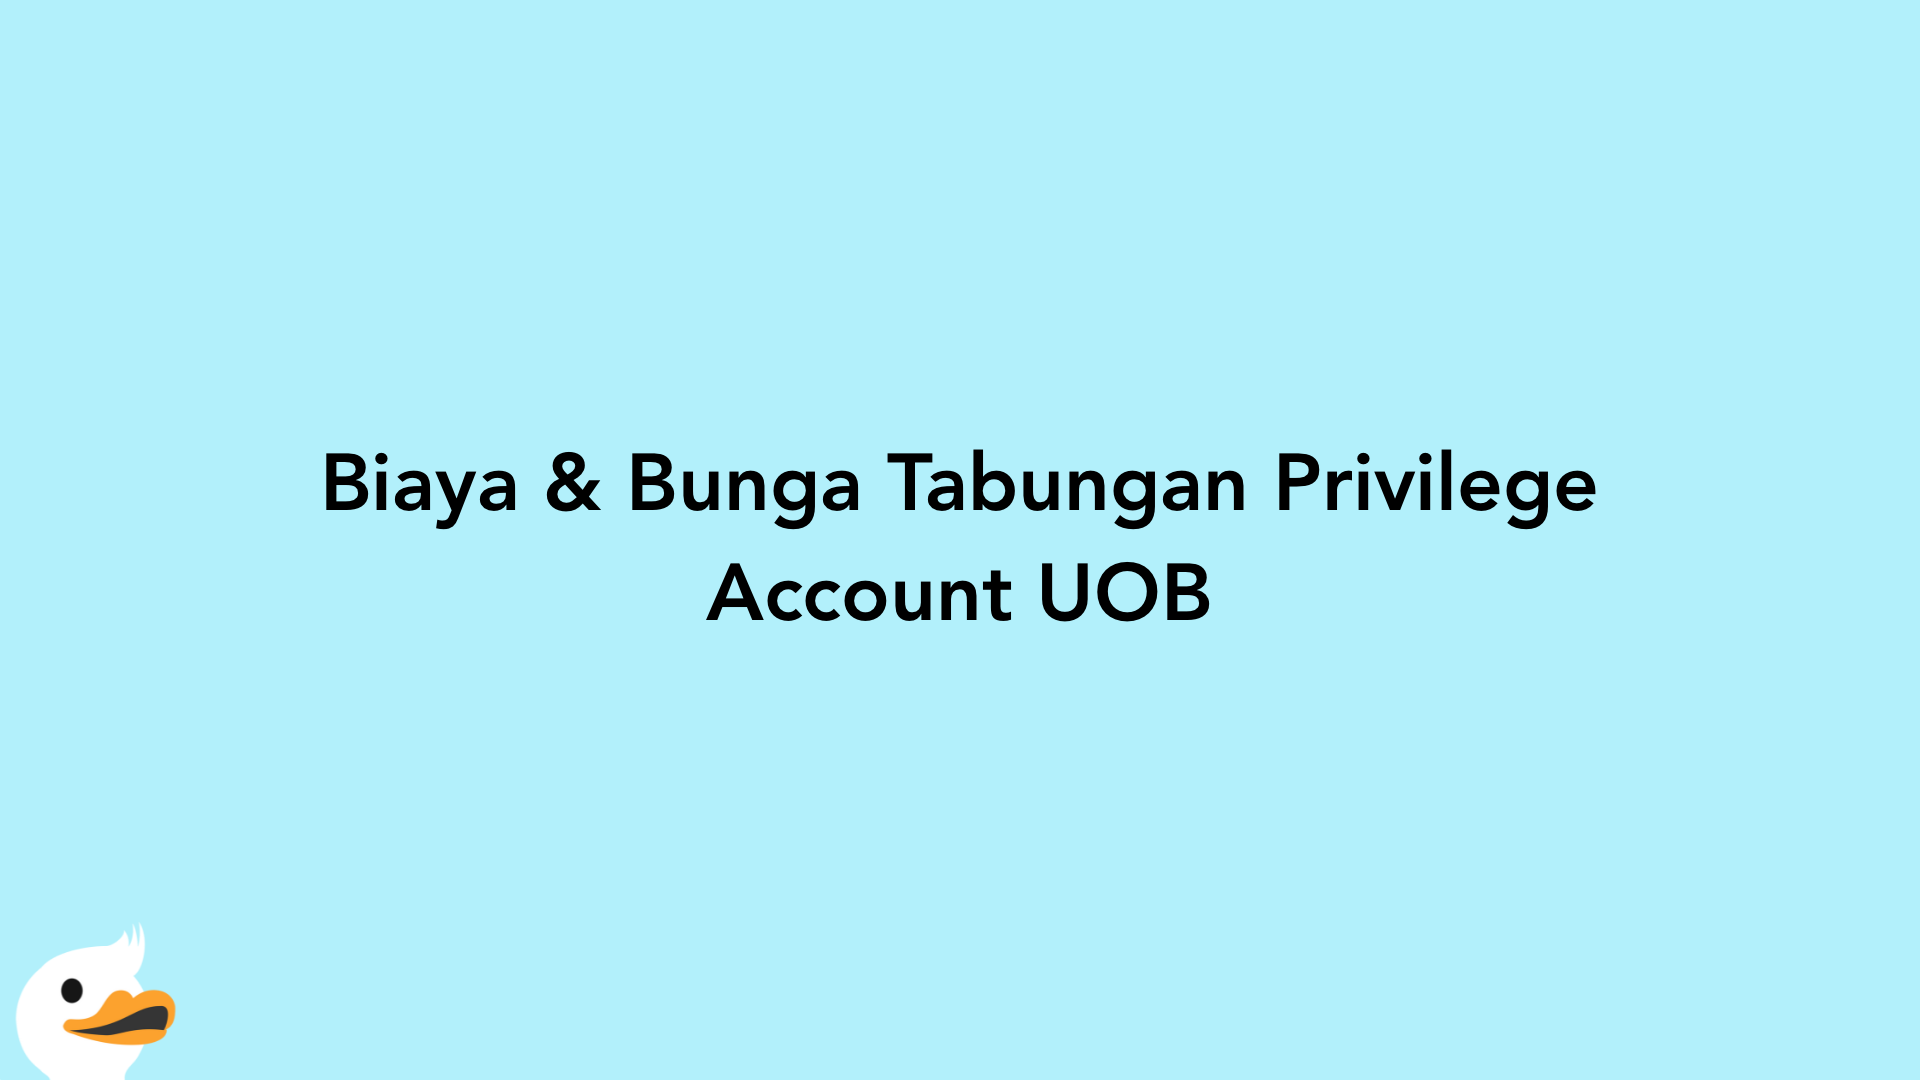 Biaya & Bunga Tabungan Privilege Account UOB